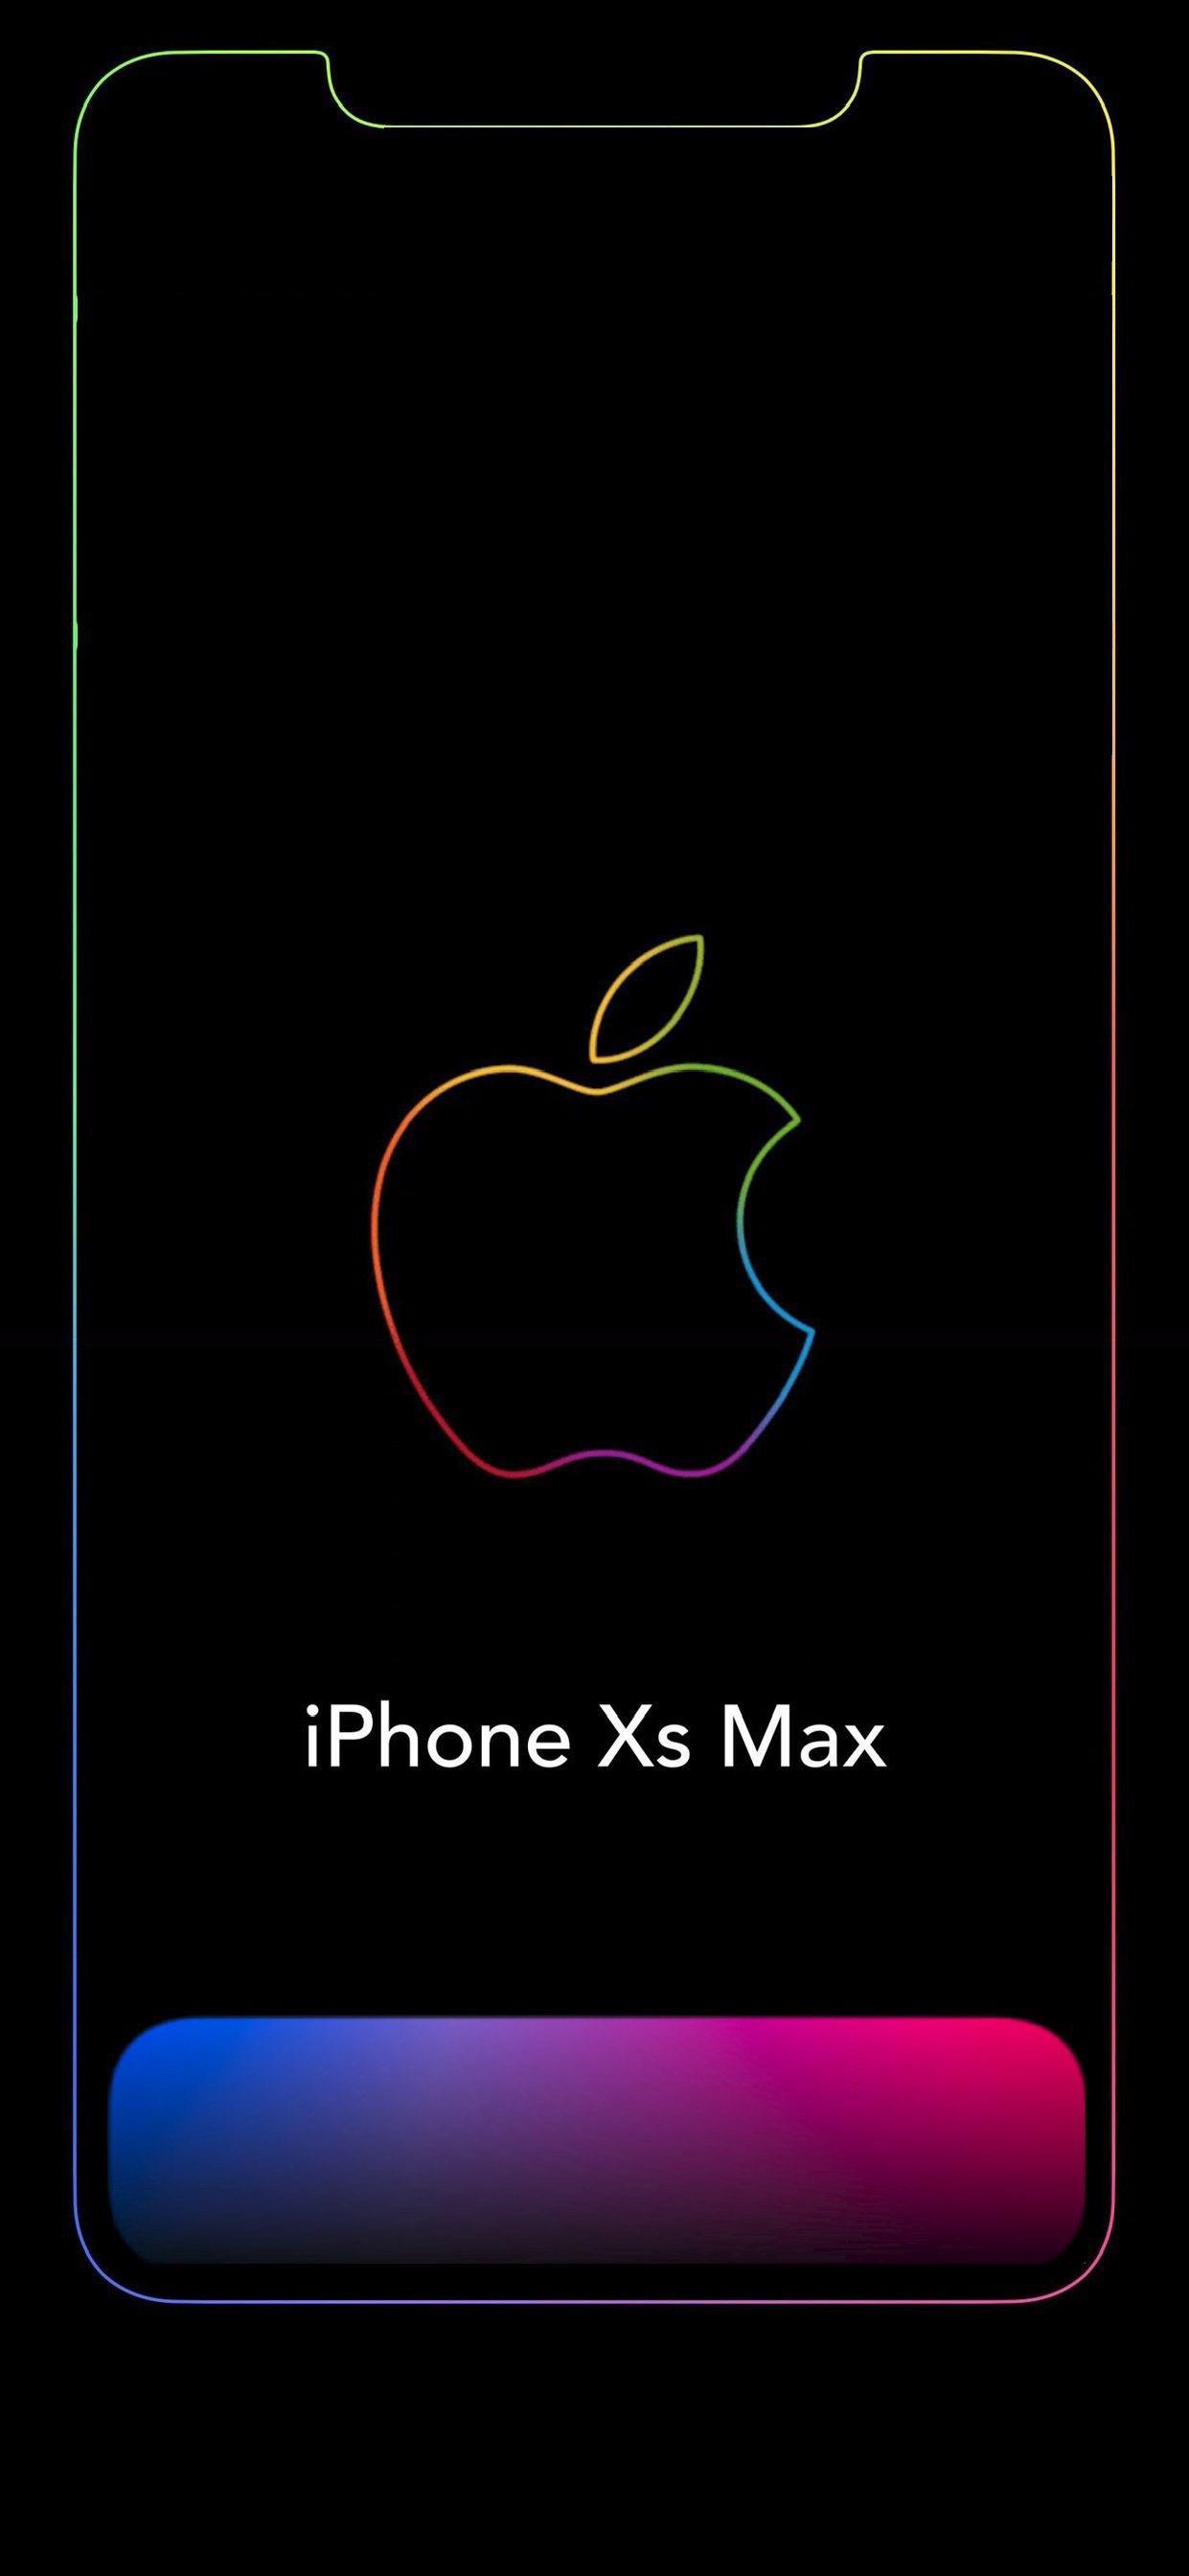 Iphone Xs Max Home Screen Wallpaper Apple Logo Home Screen